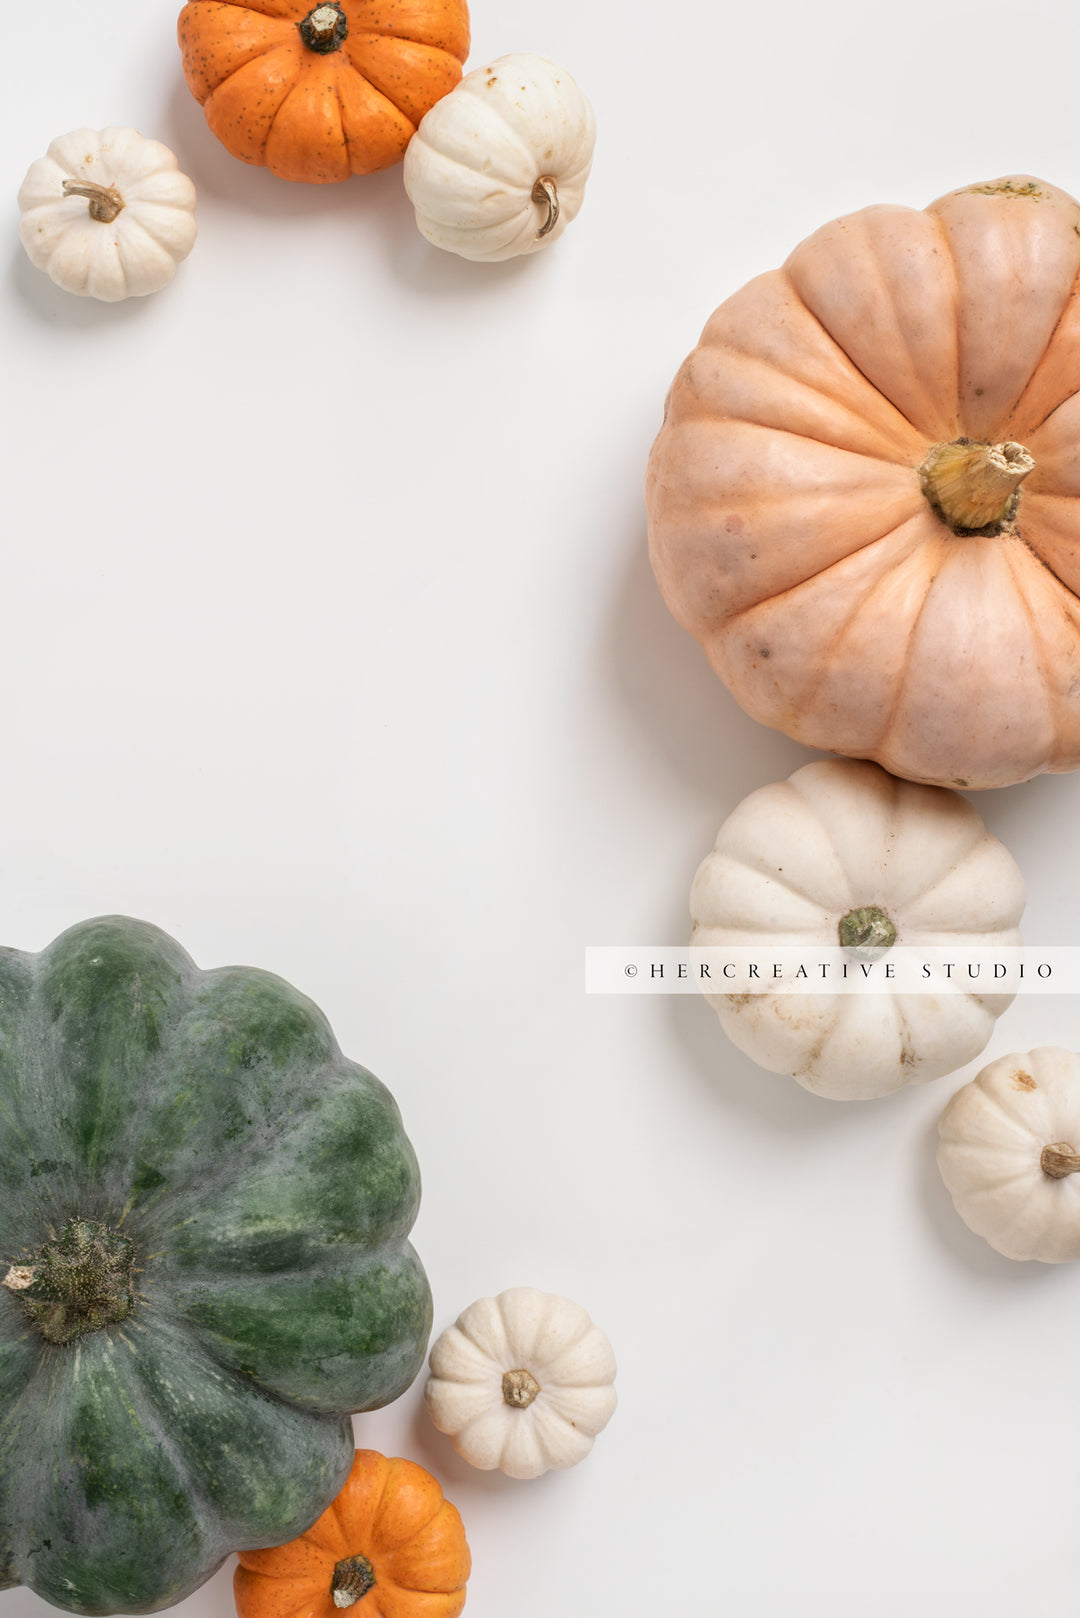 Pumpkins on White Background 6. Digital Stock Image.